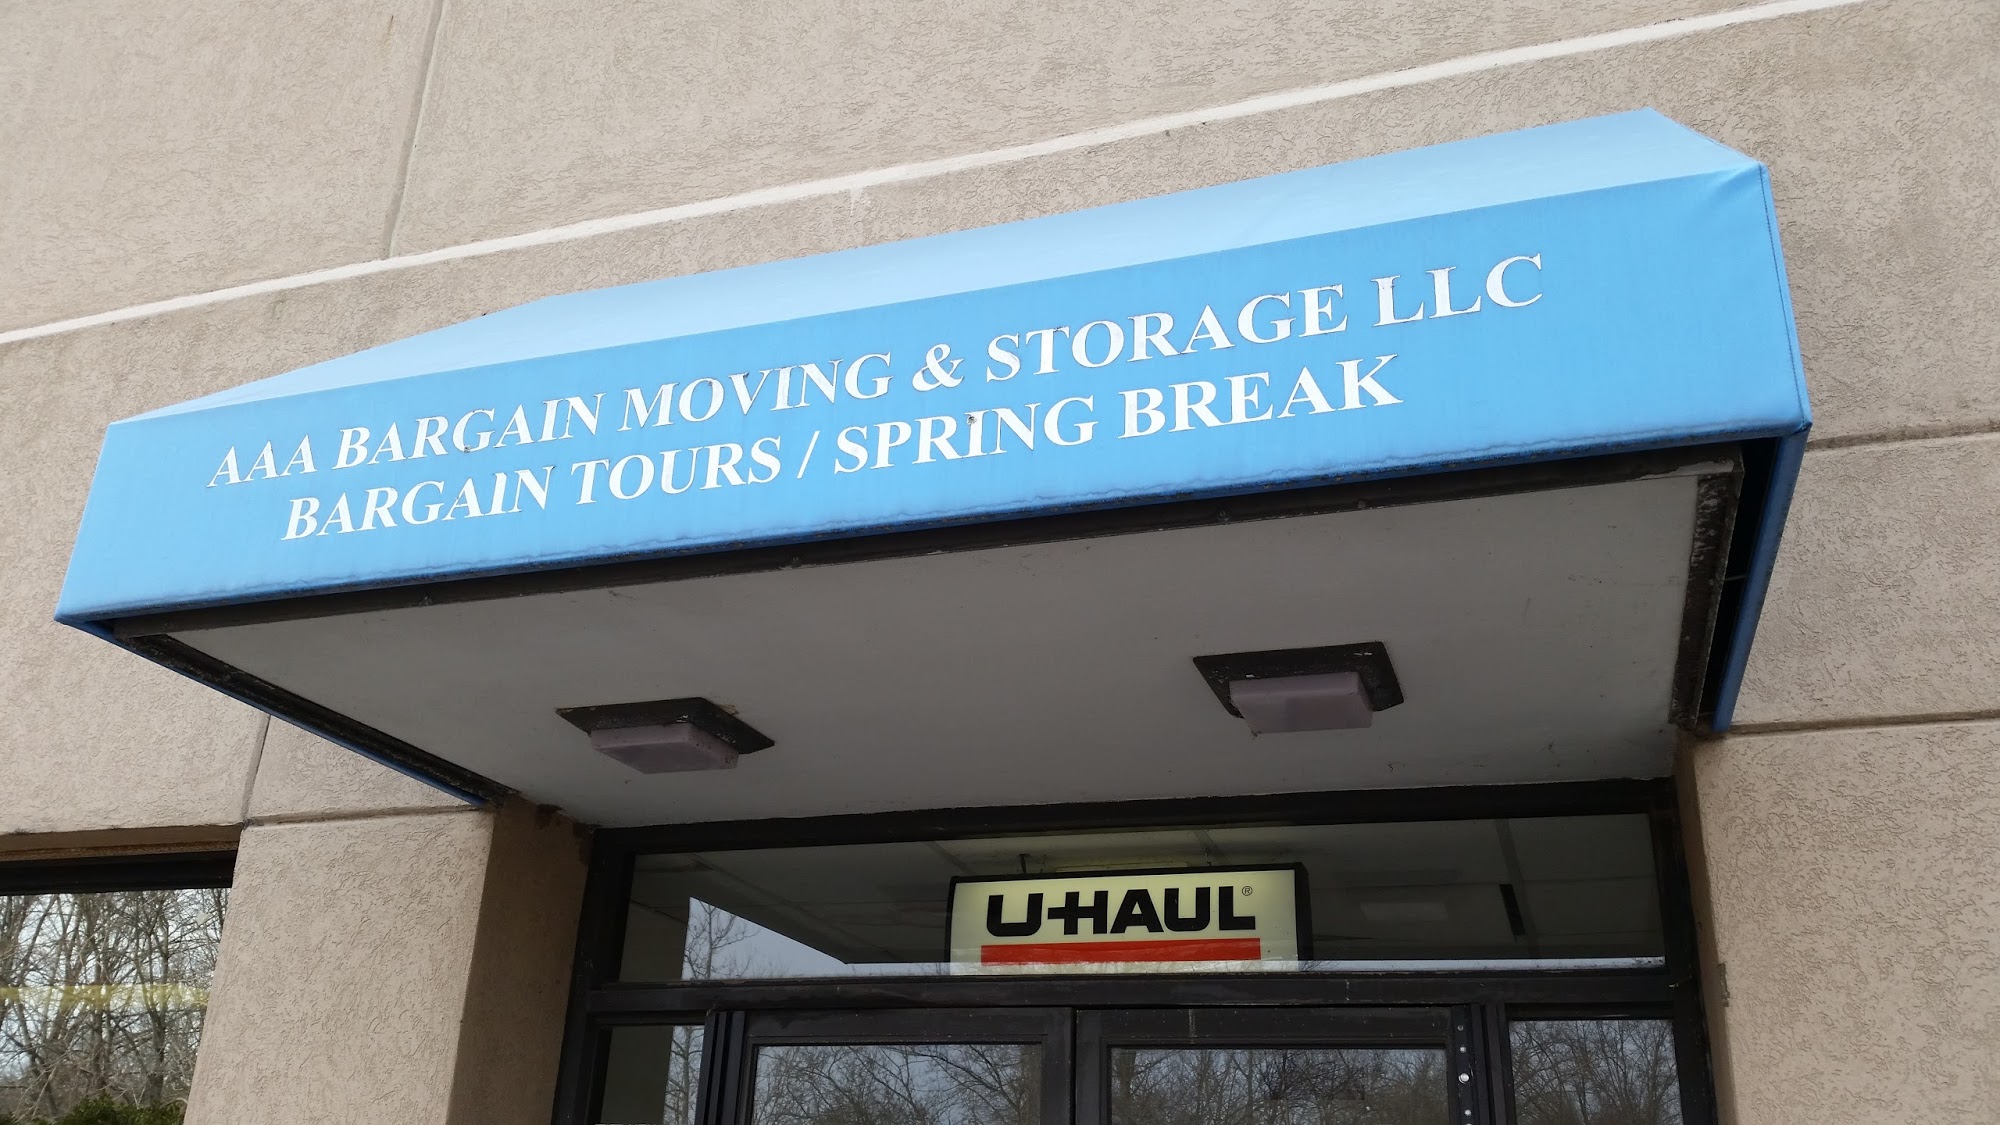 AAA Bargain Moving & Storage